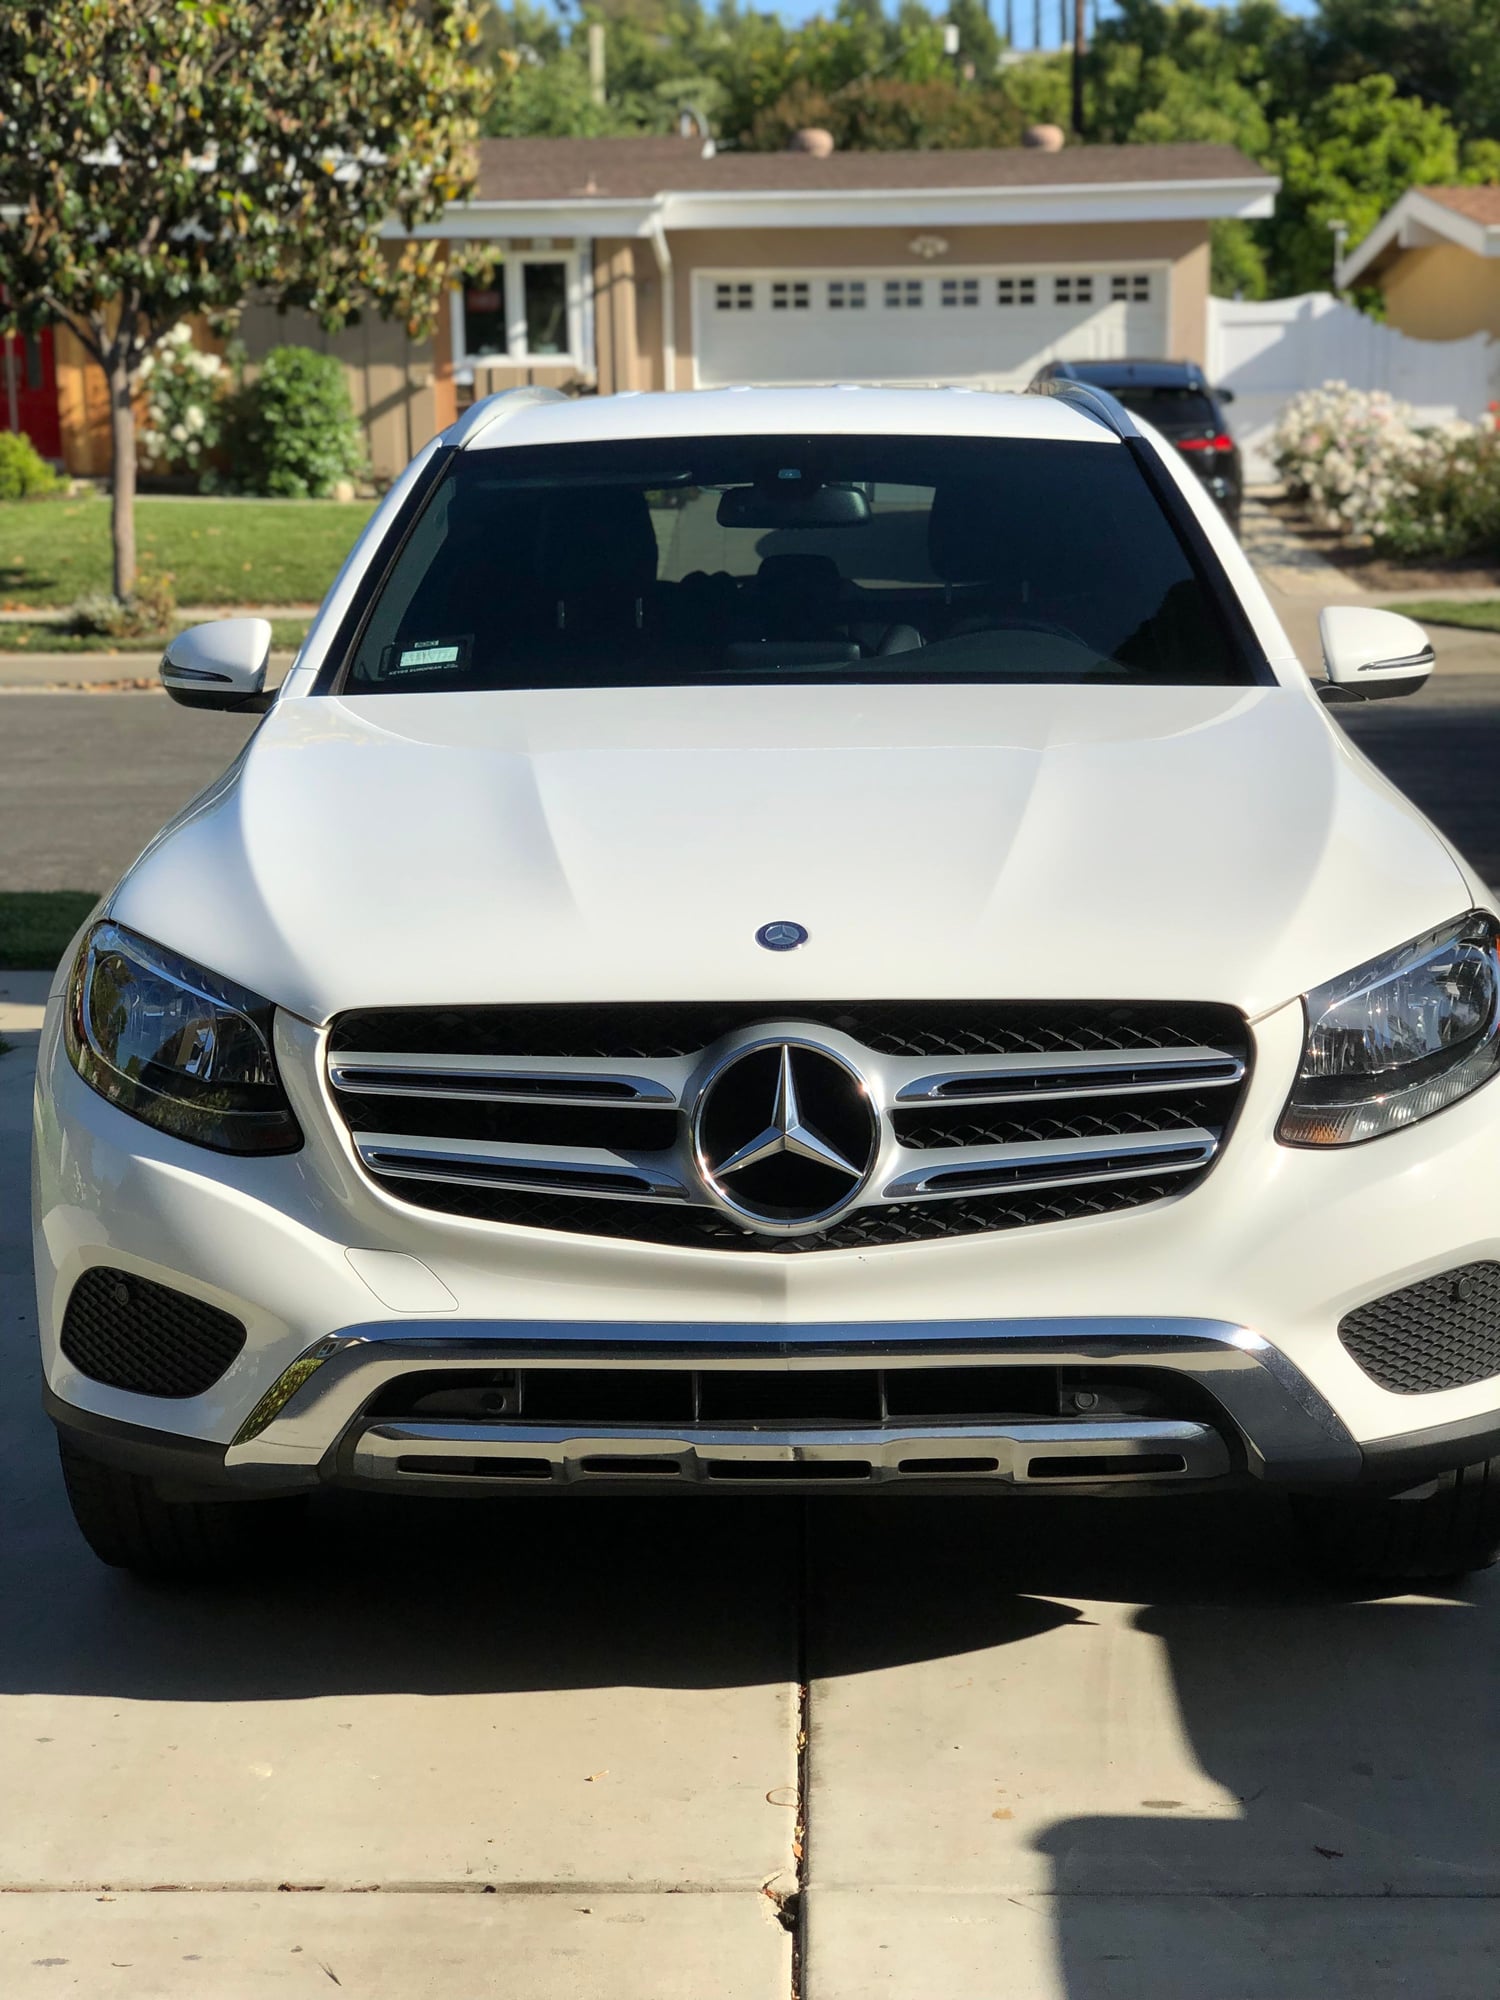 2017 Mercedes-Benz GLC300 - 2017 glc300 $26k - Used - VIN Wdc0g4jb1he137700 - 54,037 Miles - 4 cyl - 2WD - Automatic - SUV - White - Woodland Hills, CA 91364, United States